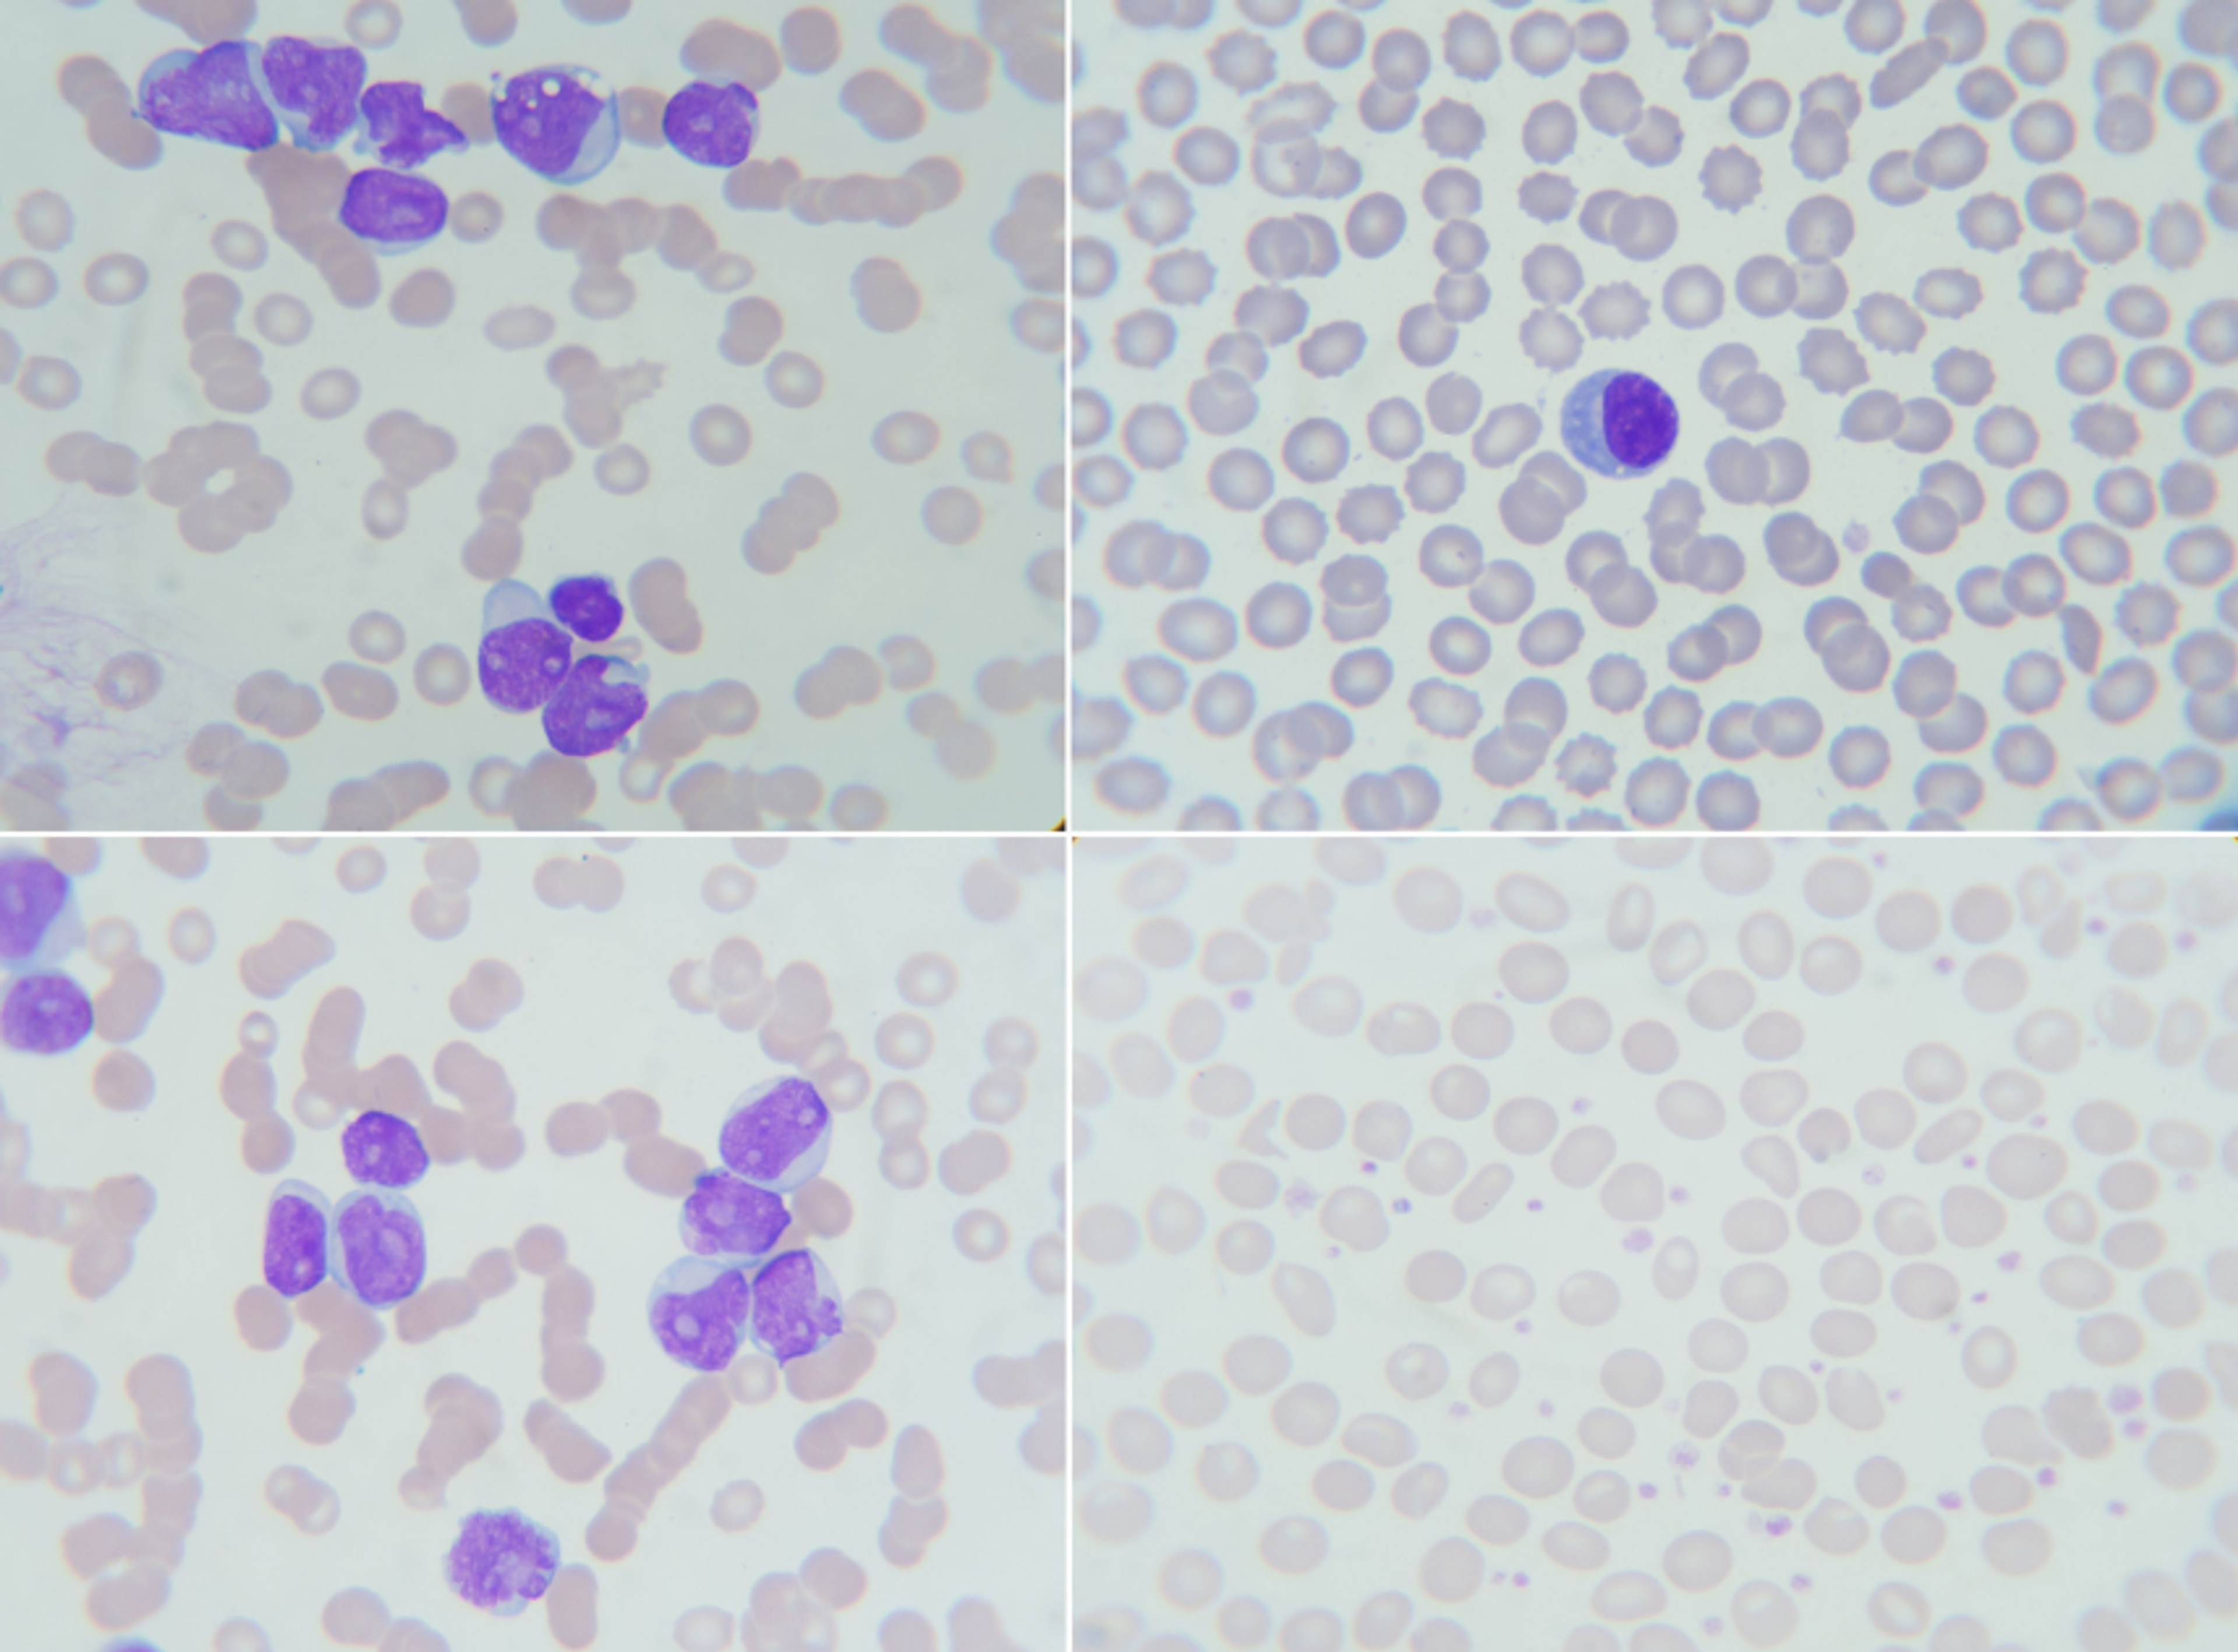 Blood film showing white cell leukemia morphology